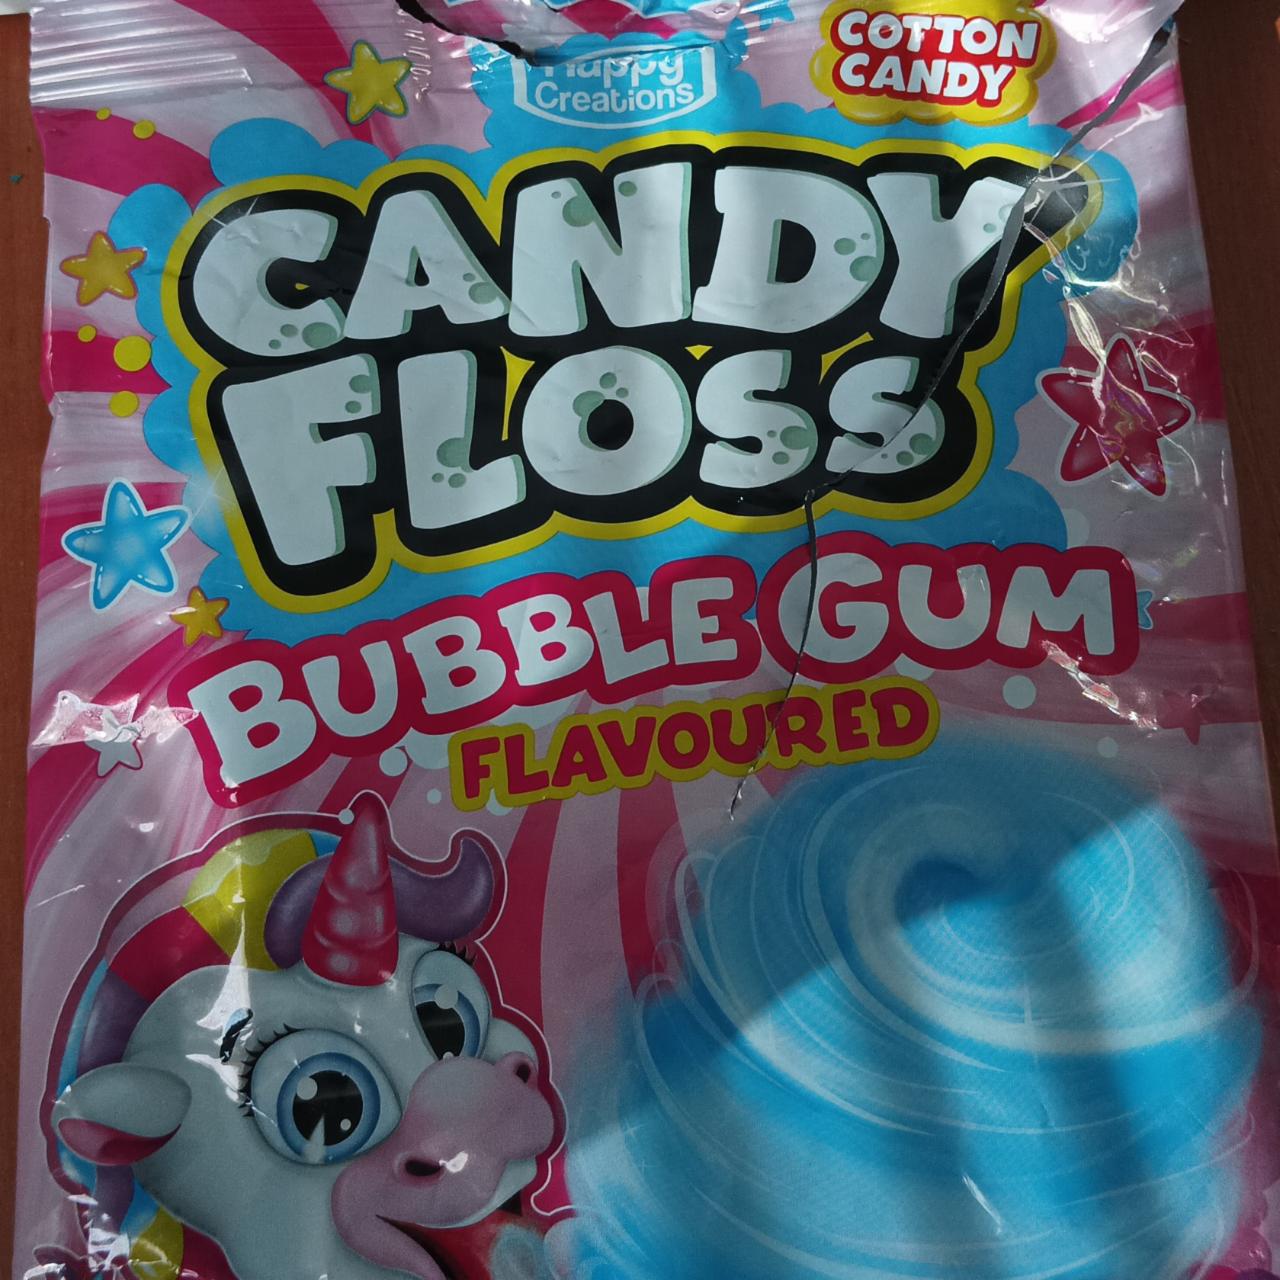 Fotografie - Candy Floss Bubble gum flavoured Happy Creations